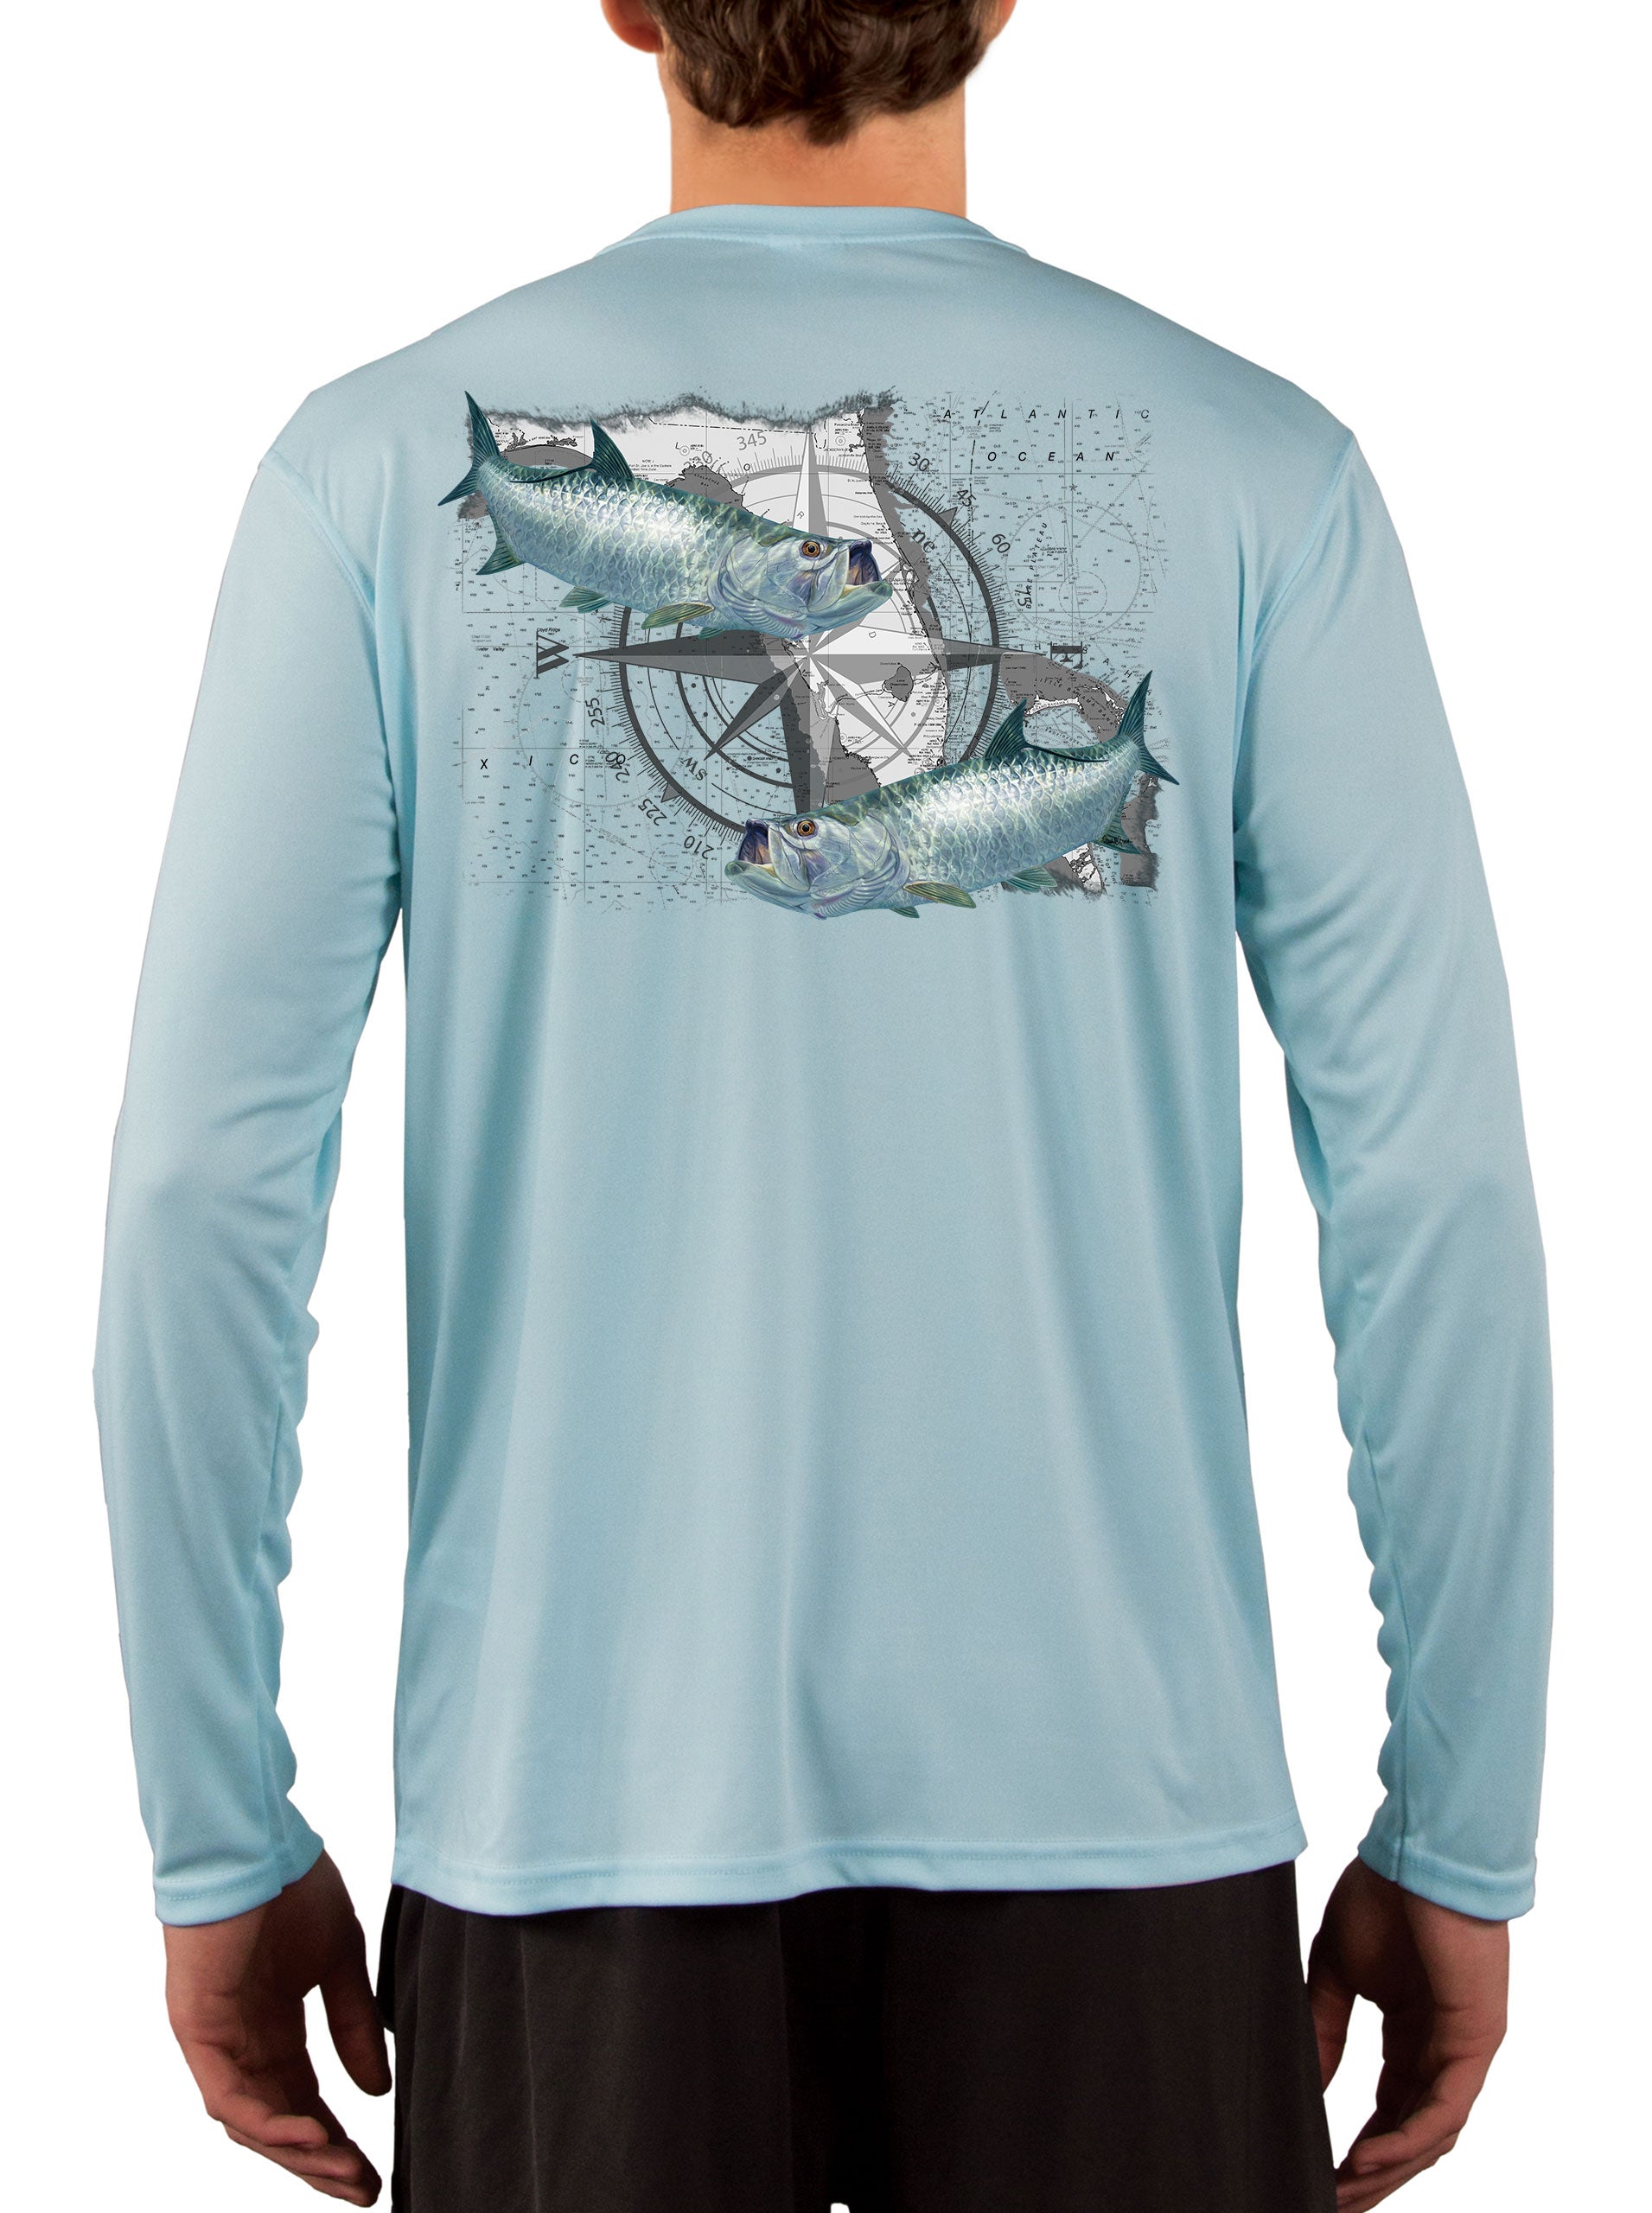 Tarpon Compass Fishing Shirts for Men Florida State Flag